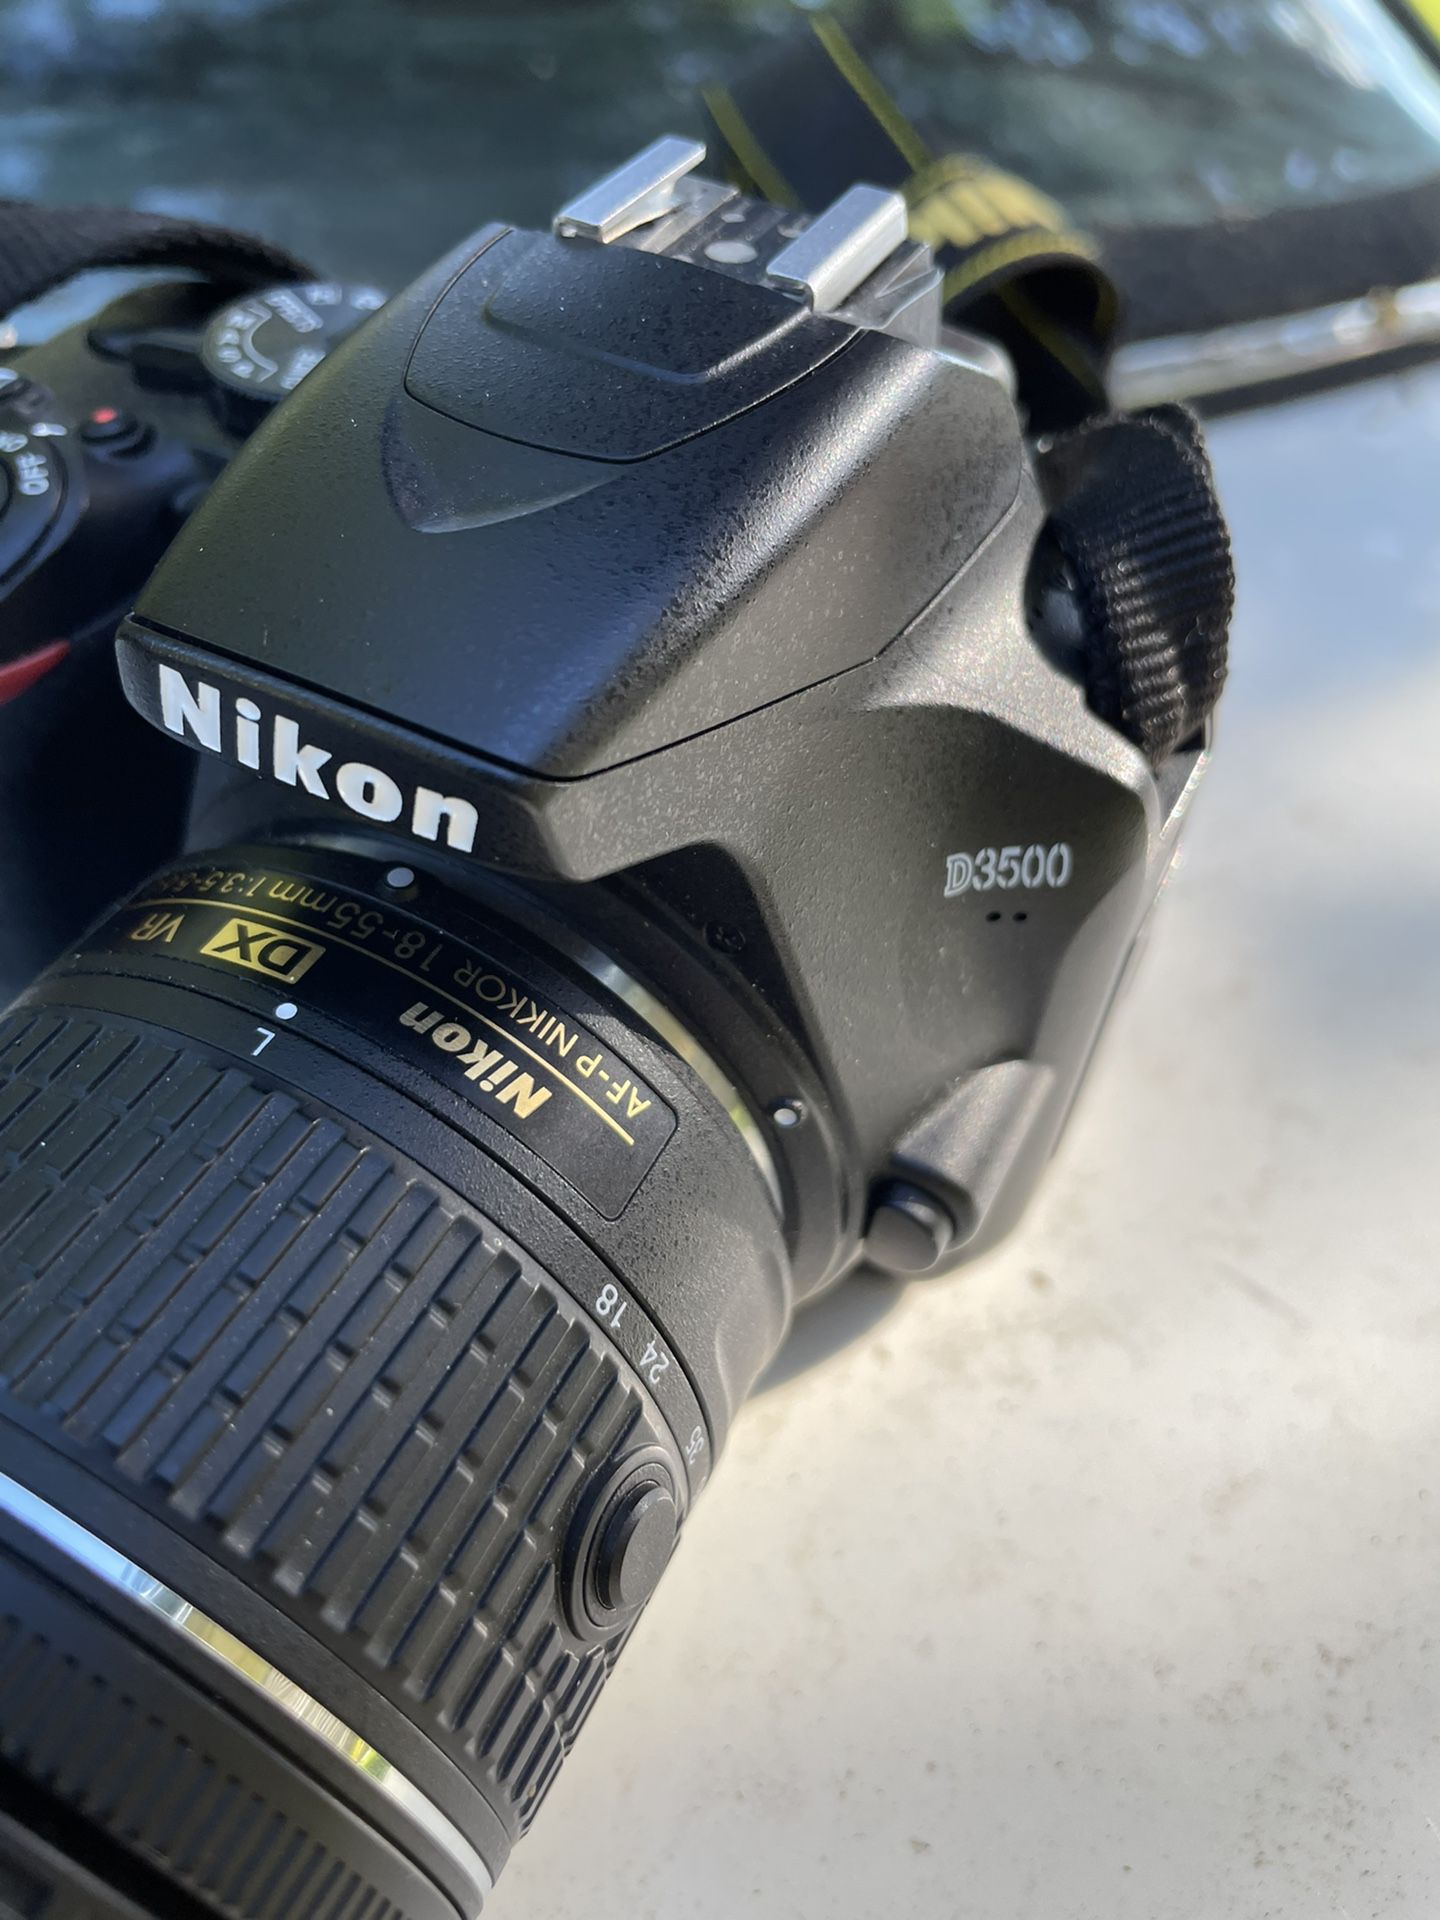 Canon Rebel Sl1 And Nikon D3500